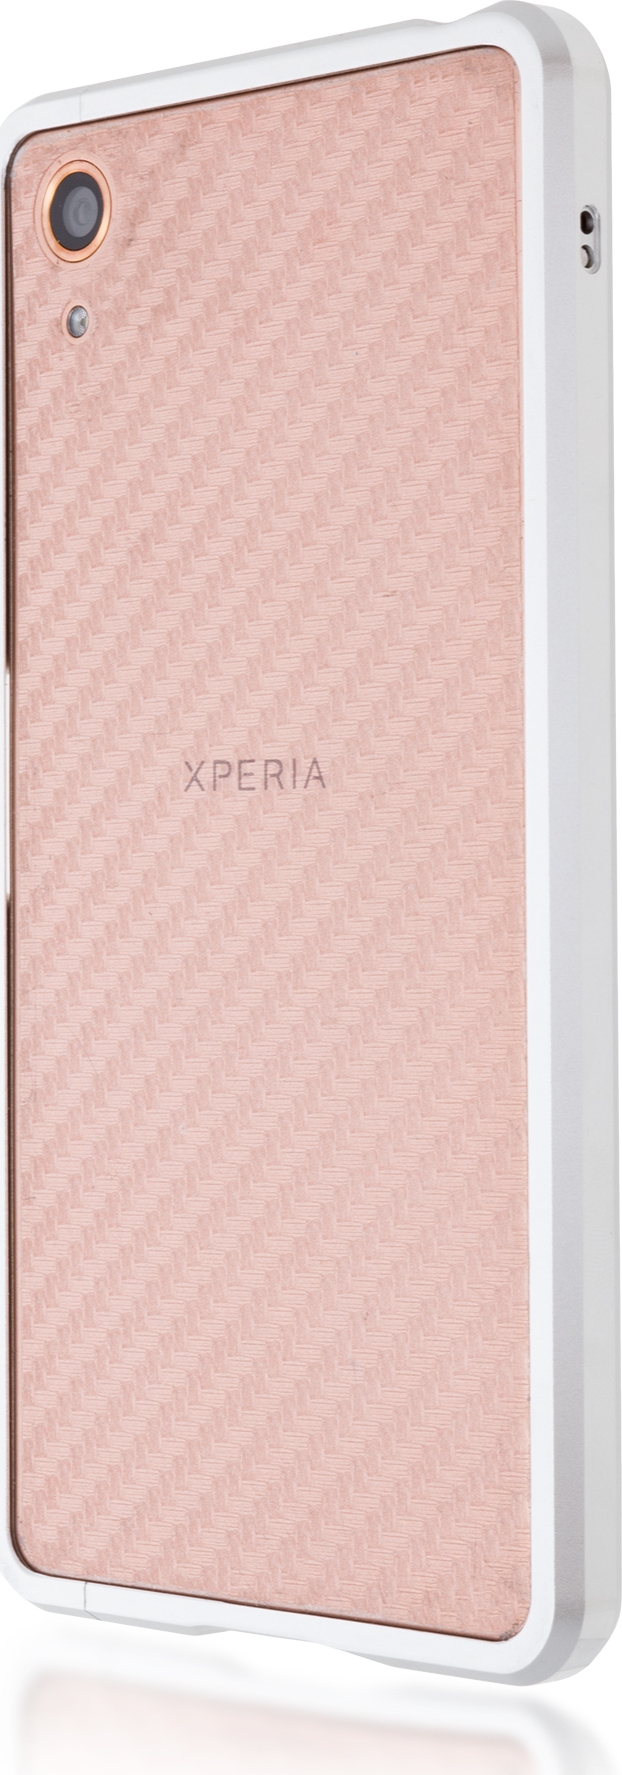 Чехол Brosco BMP для Sony Xperia X Perfomance, серебристый